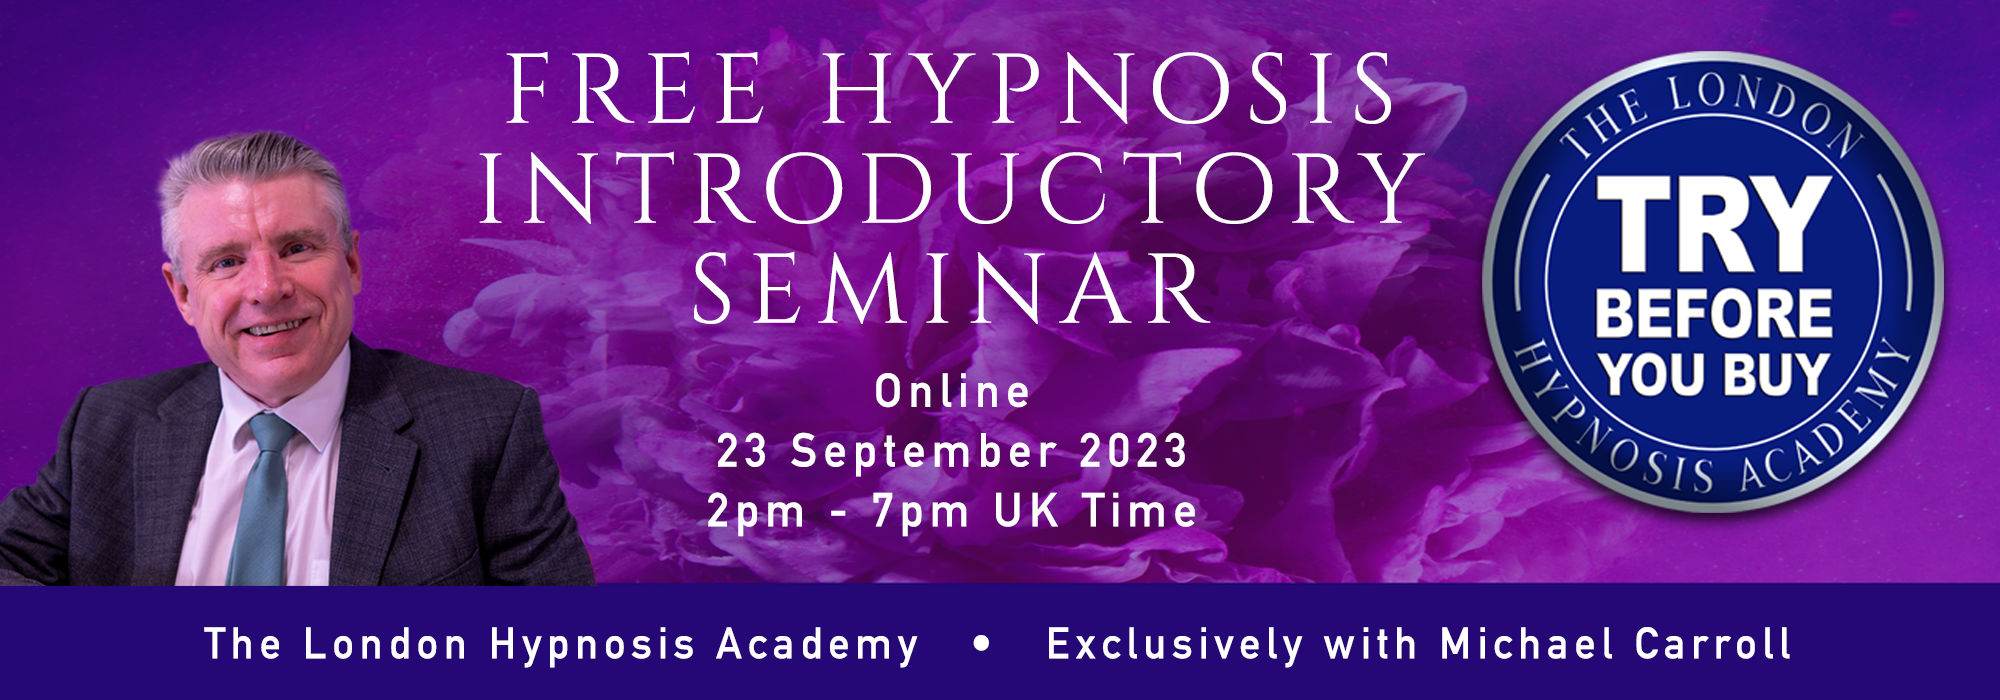 Free Hypnosis Introductory Seminar